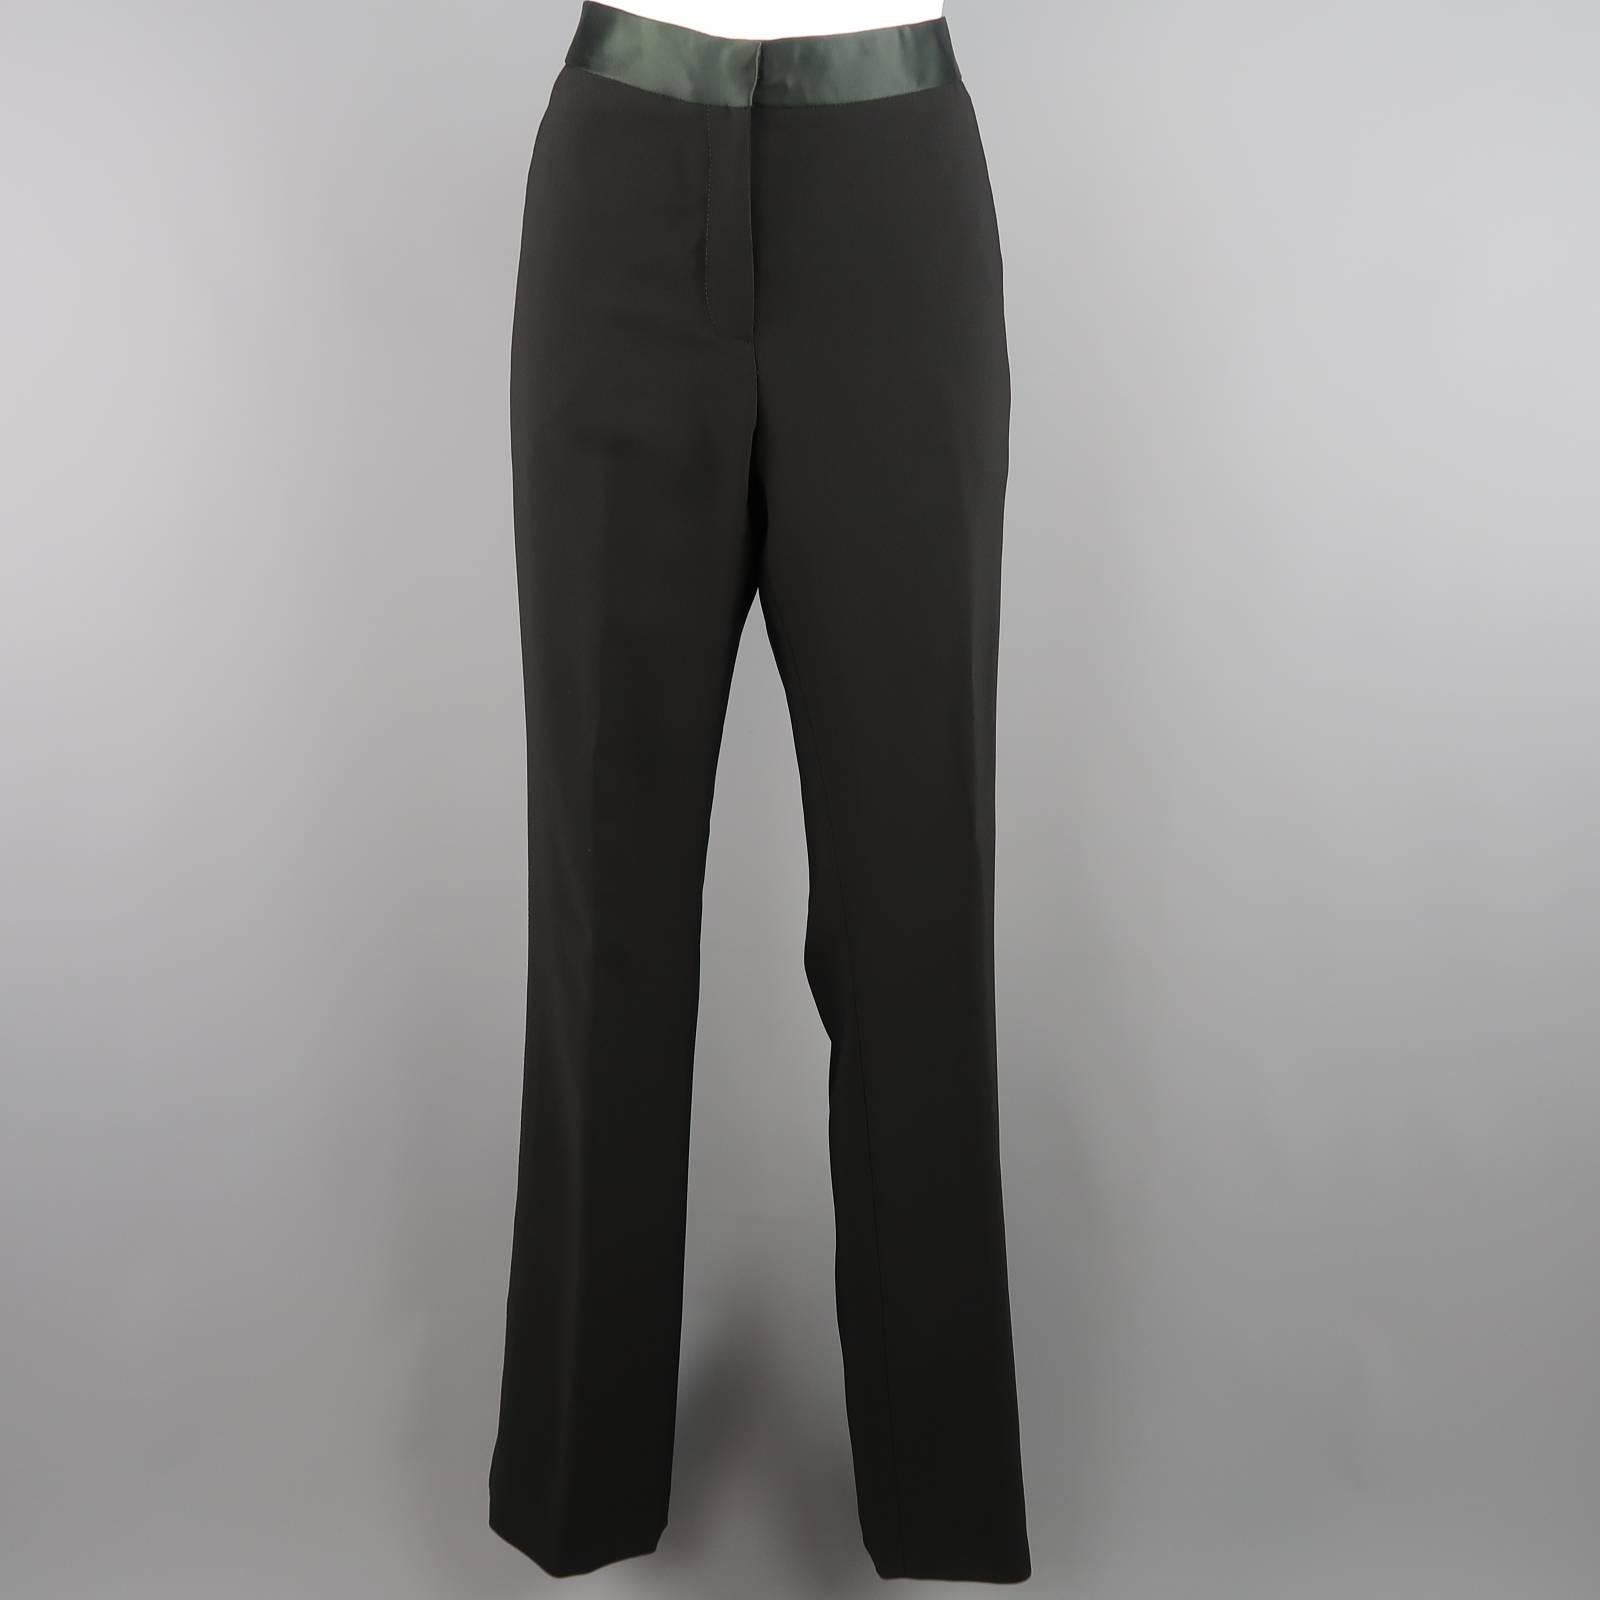 GIANFRANCO FERRE Size 10 Black & Green Peak Lapel Tuxedo Pants Suit 2